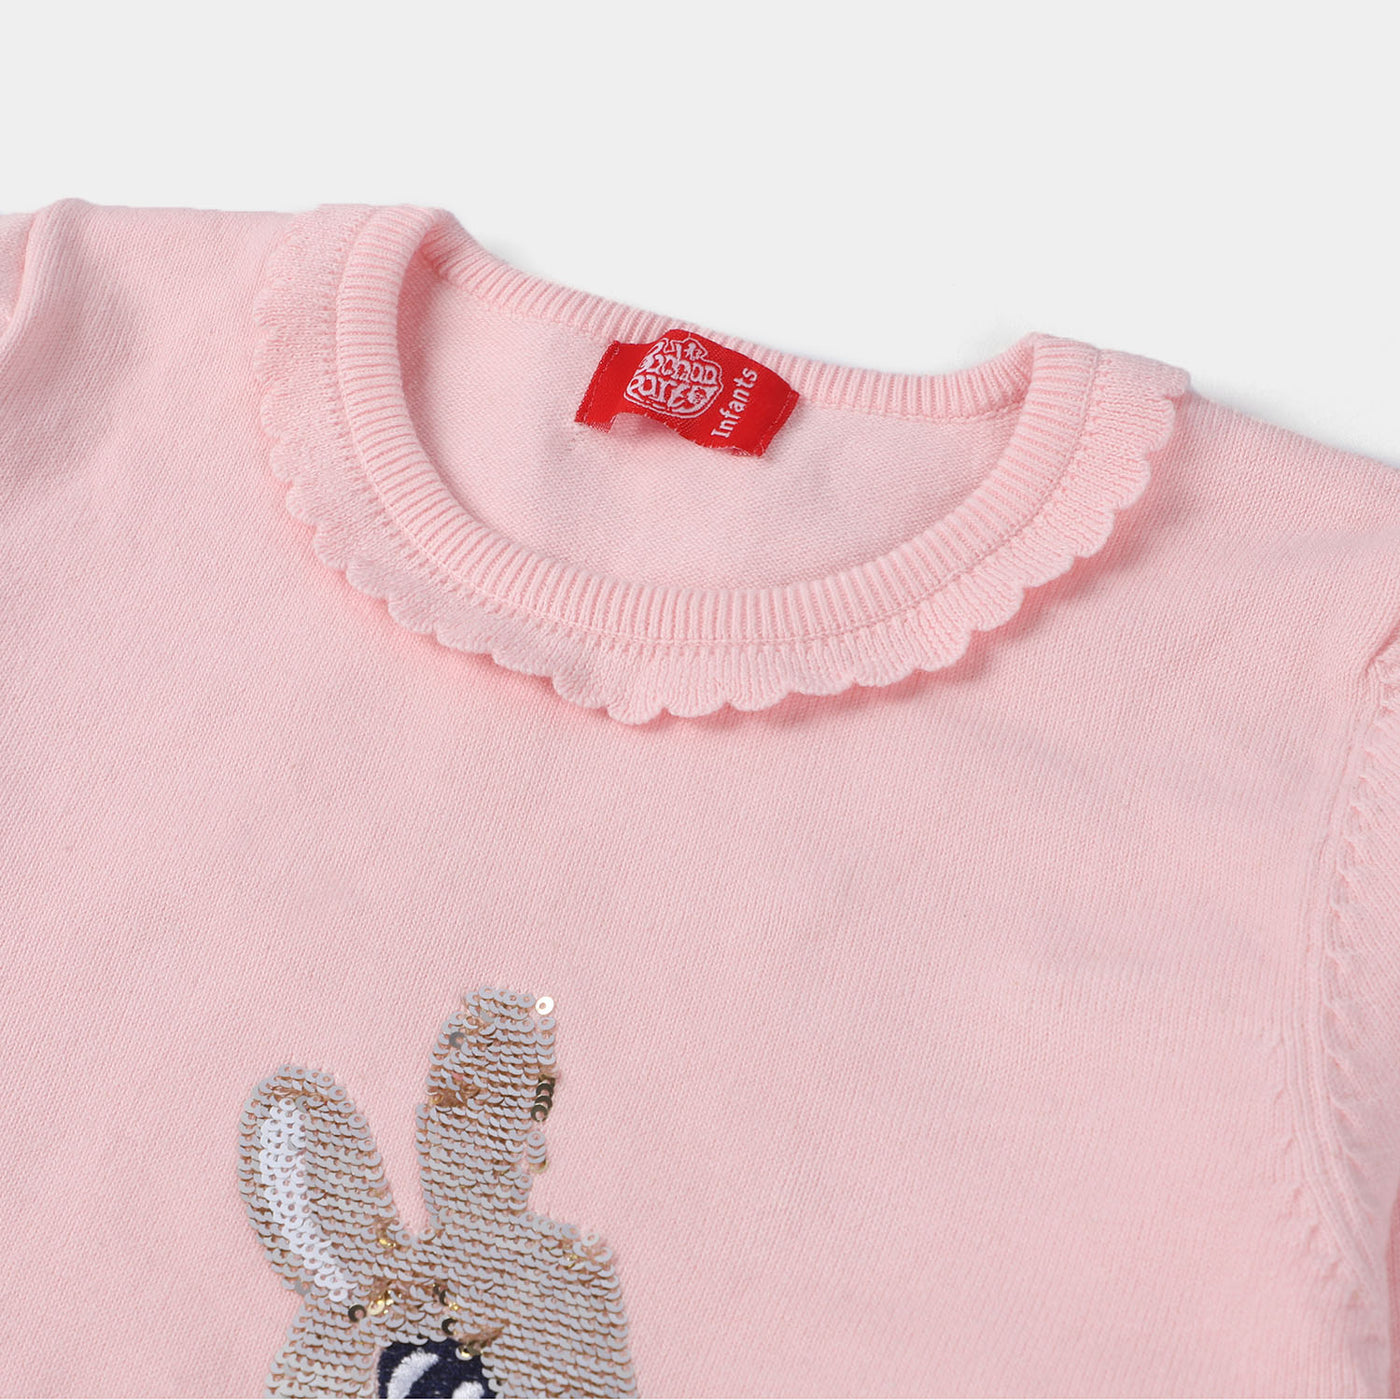 Girls Knitted Sweater Rabbit-Light Pink